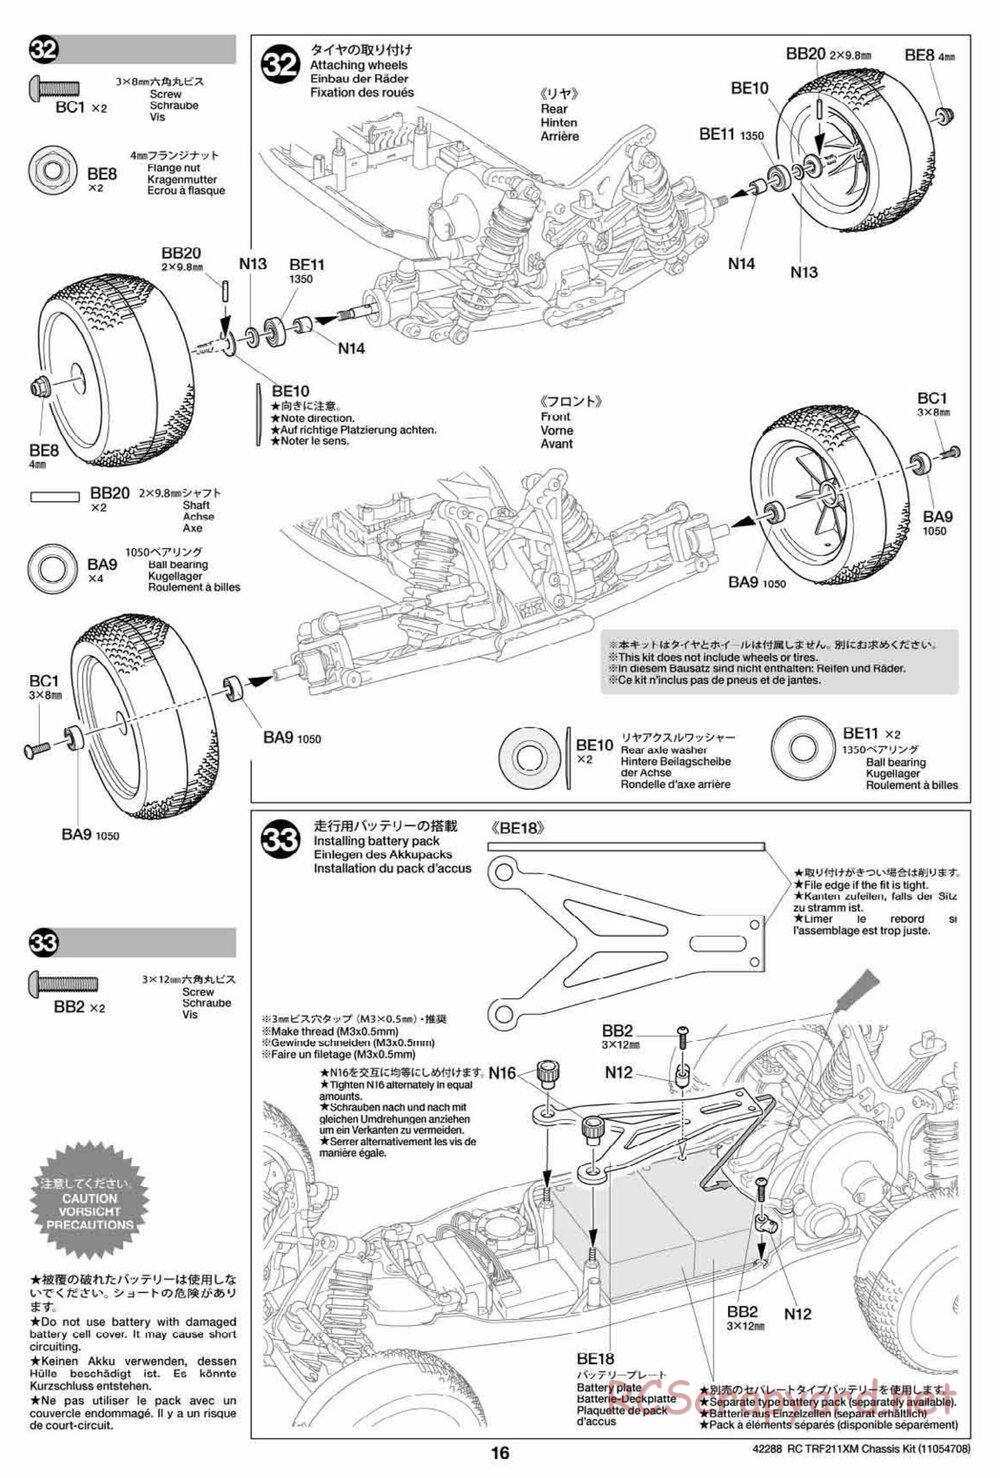 Tamiya - TRF211XM Chassis - Manual - Page 16